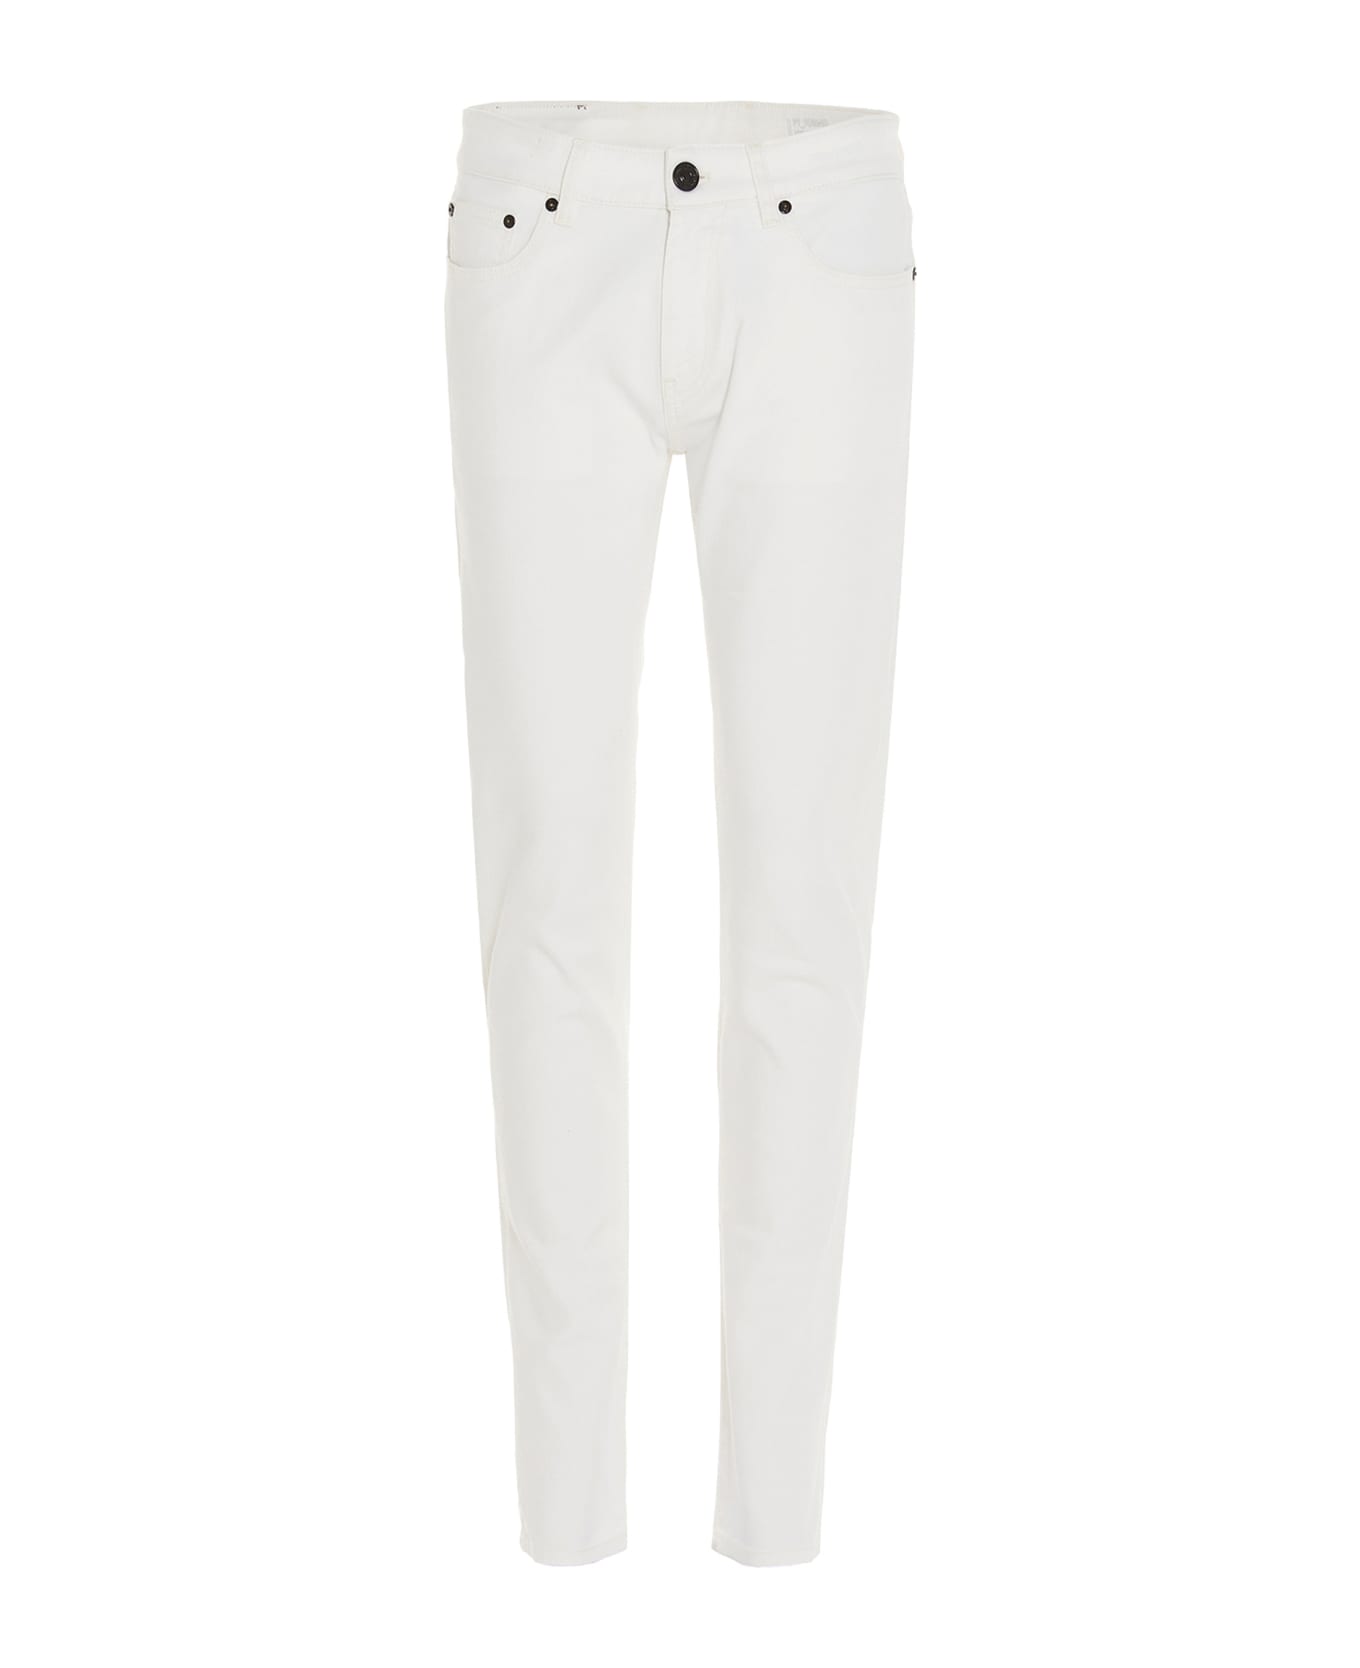 PT Torino 'rock' Jeans - White